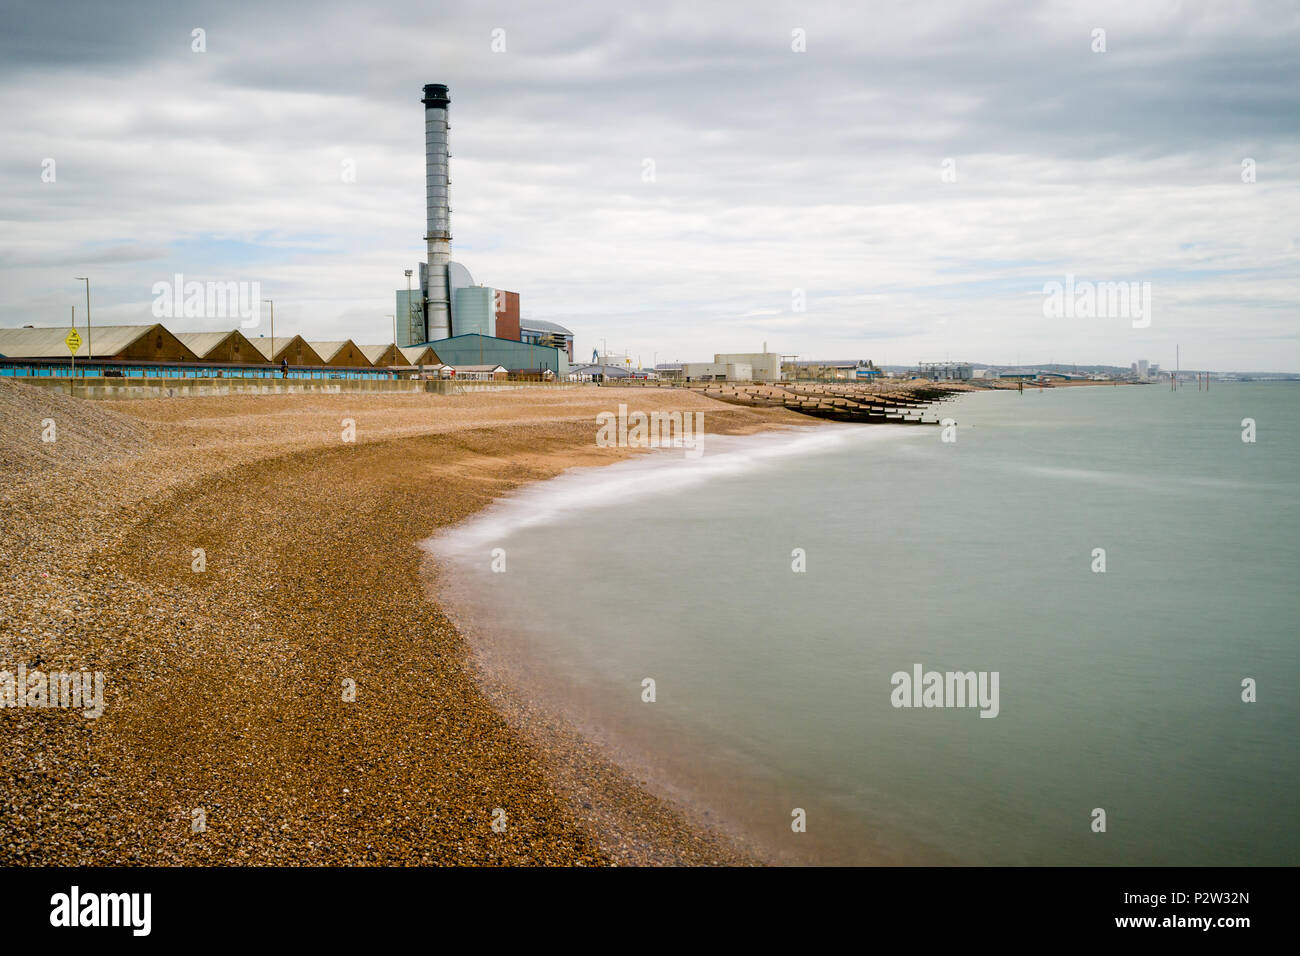 Shoreham power station from the beach at Shoreham Harbour, East Sussex, England, UK. Stock Photo